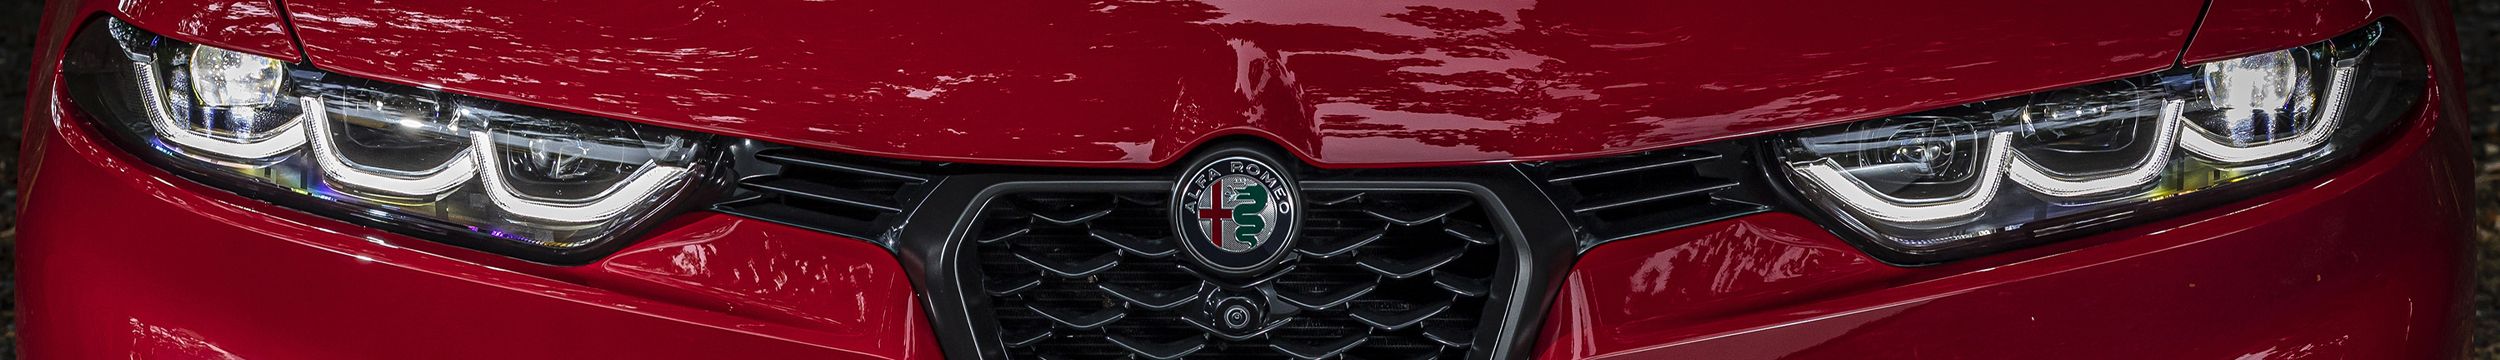 Alfa Romeo page header image